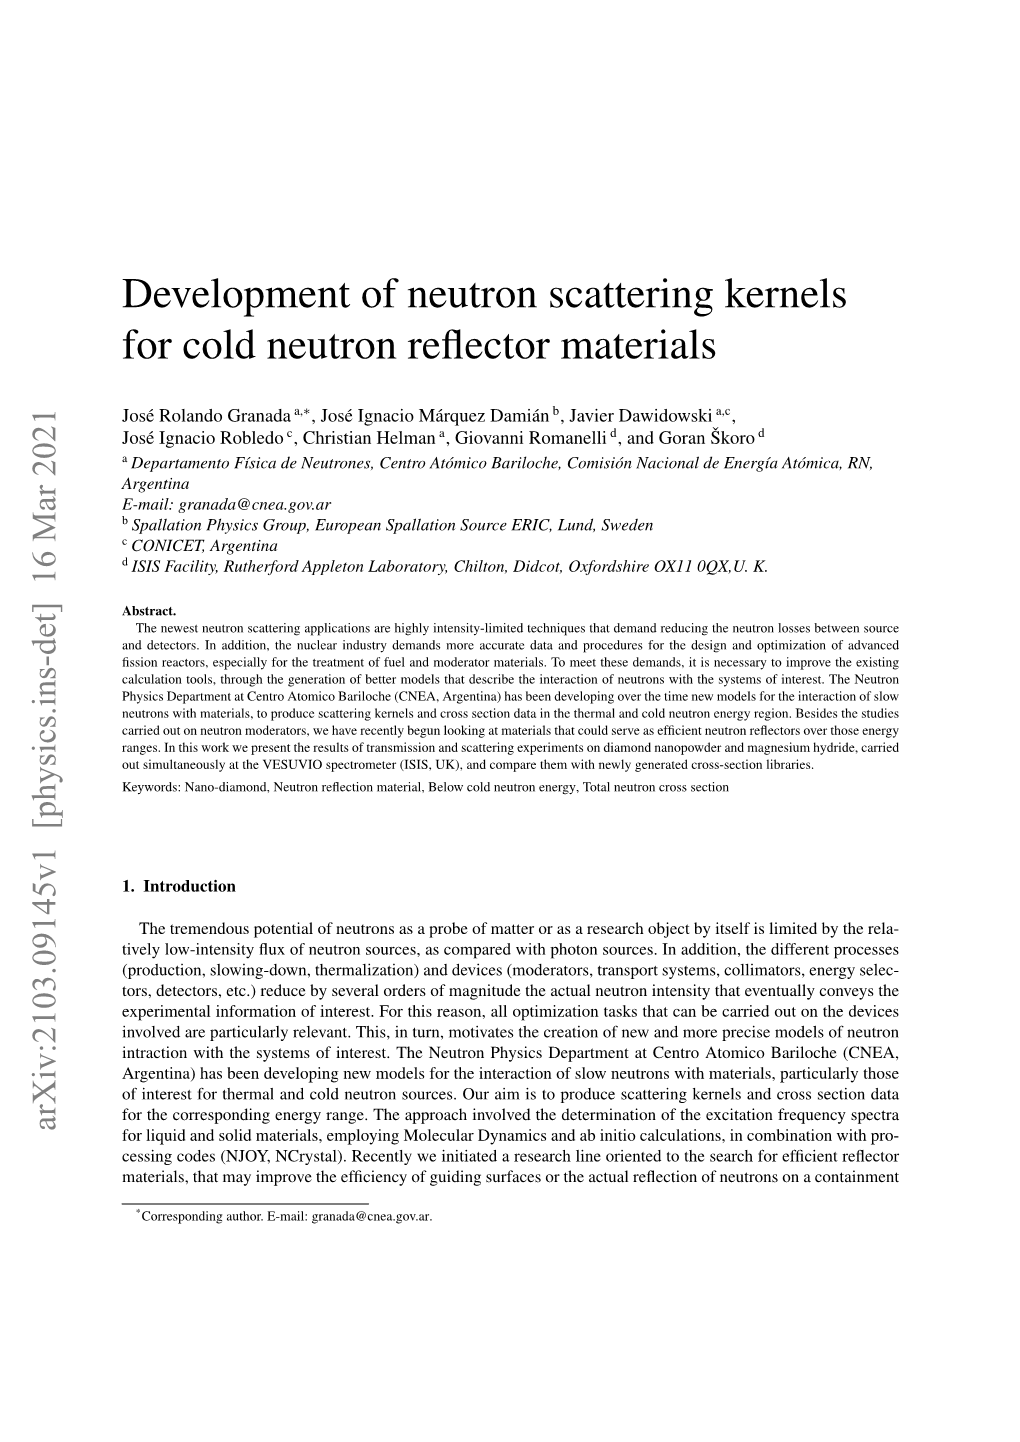 Development of Neutron Scattering Kernels for Cold Neutron Reflector Materials